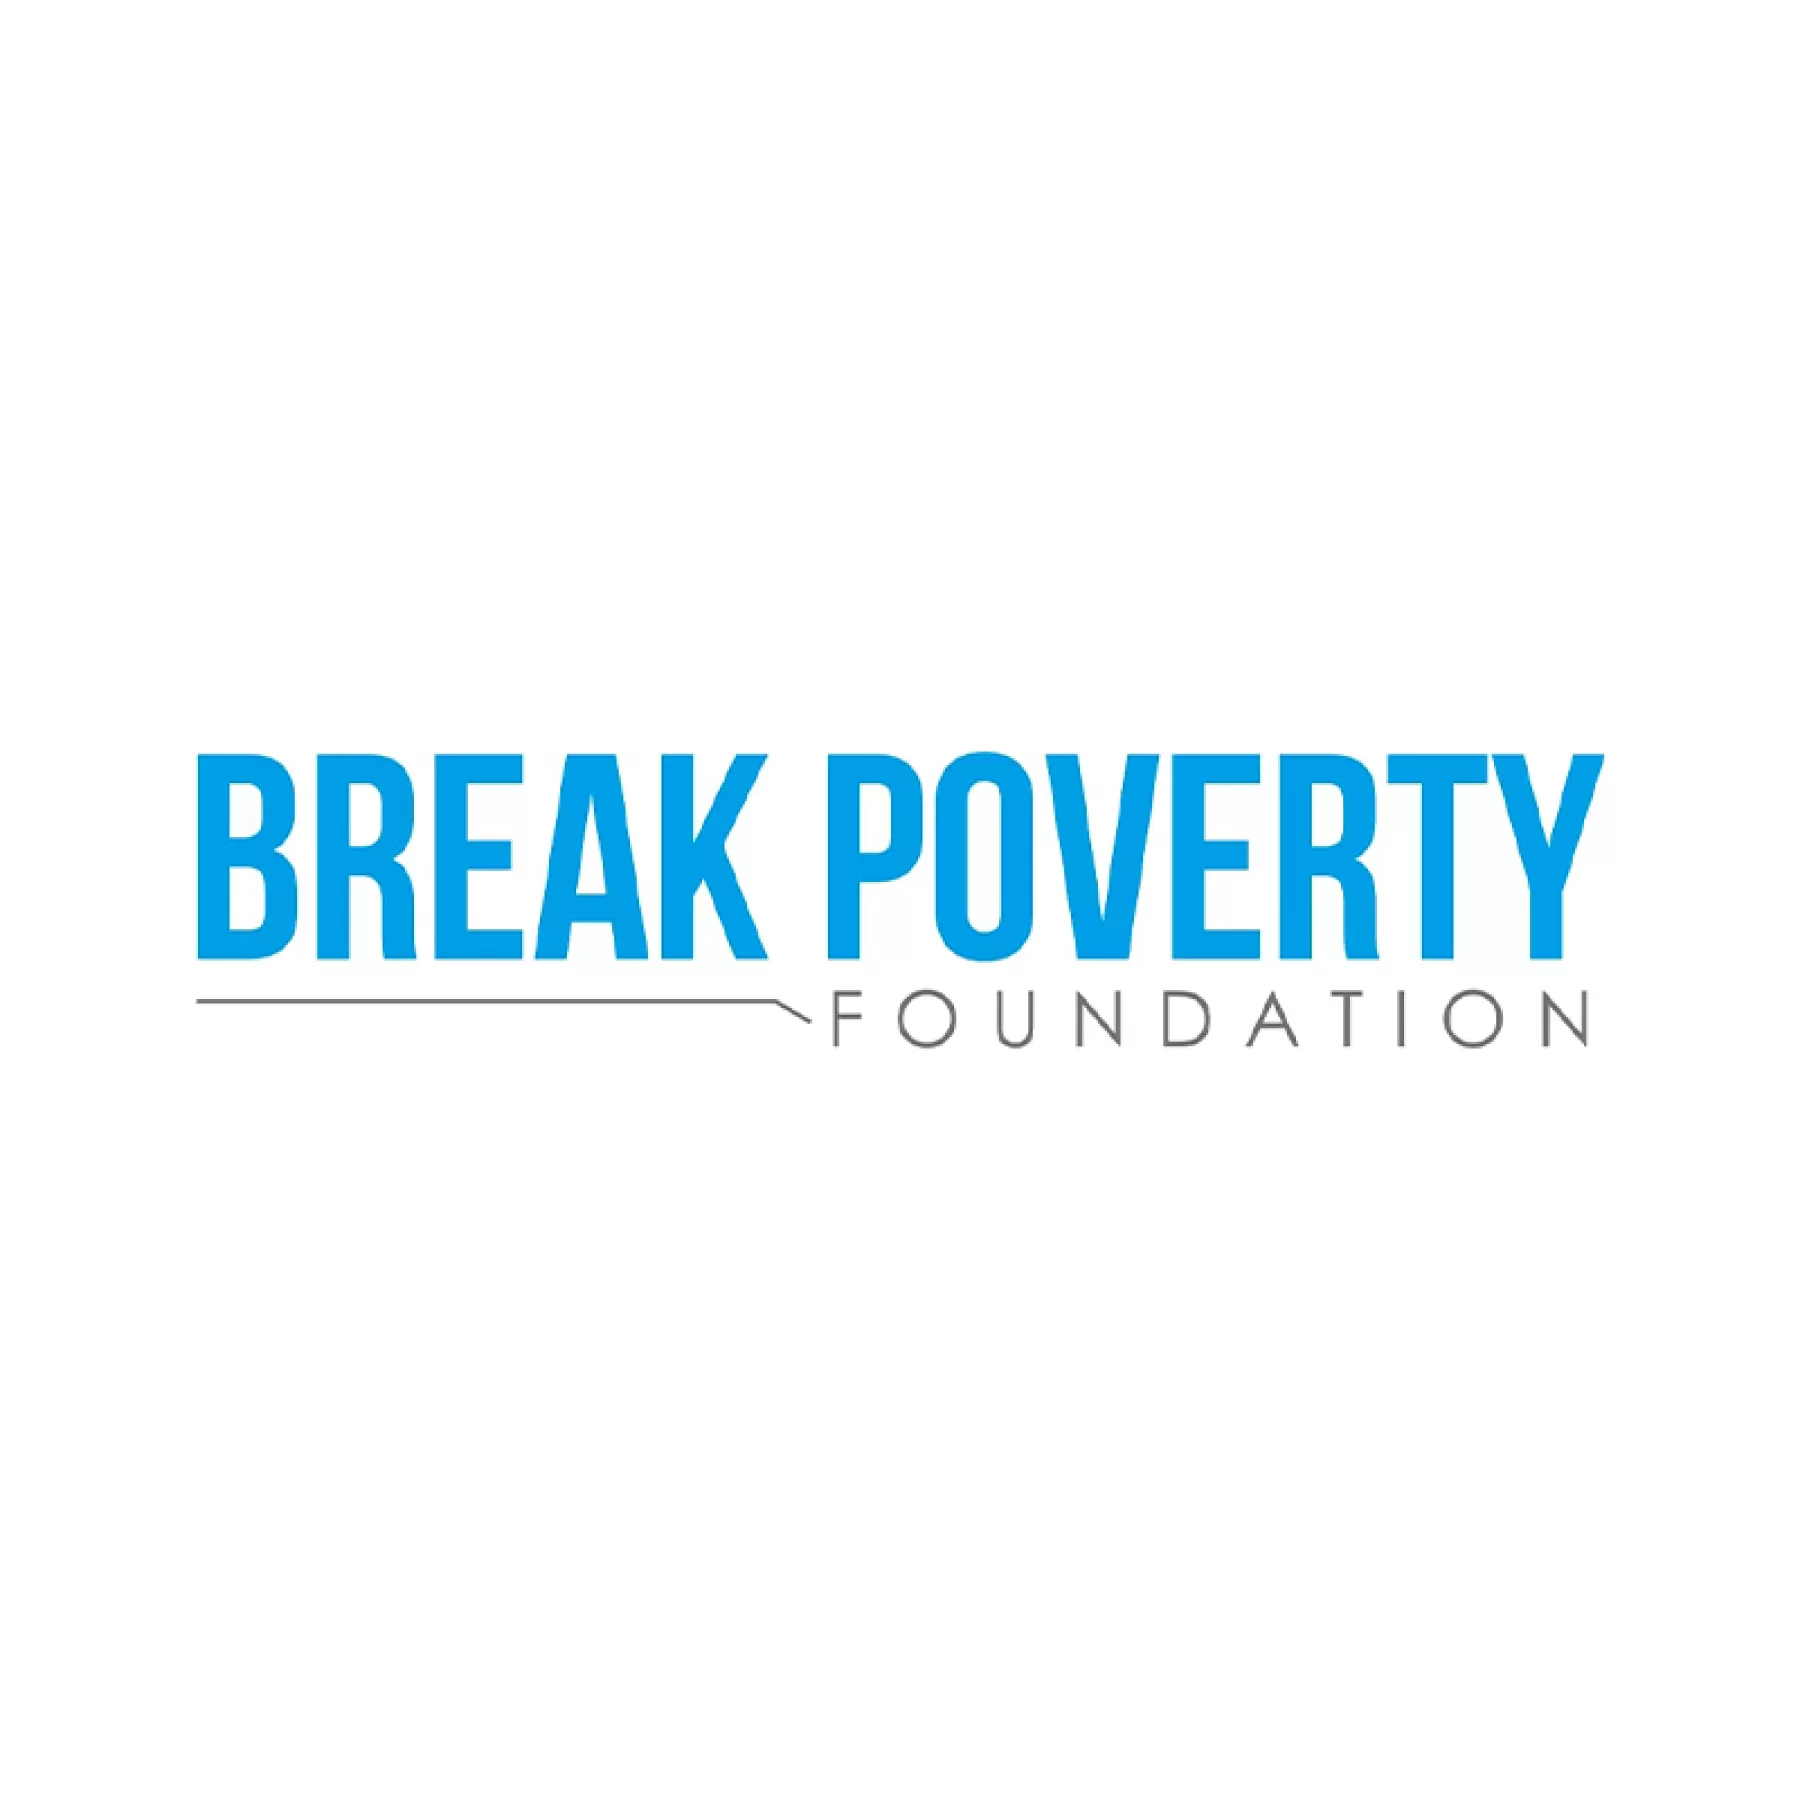 Illustration - Break Poverty